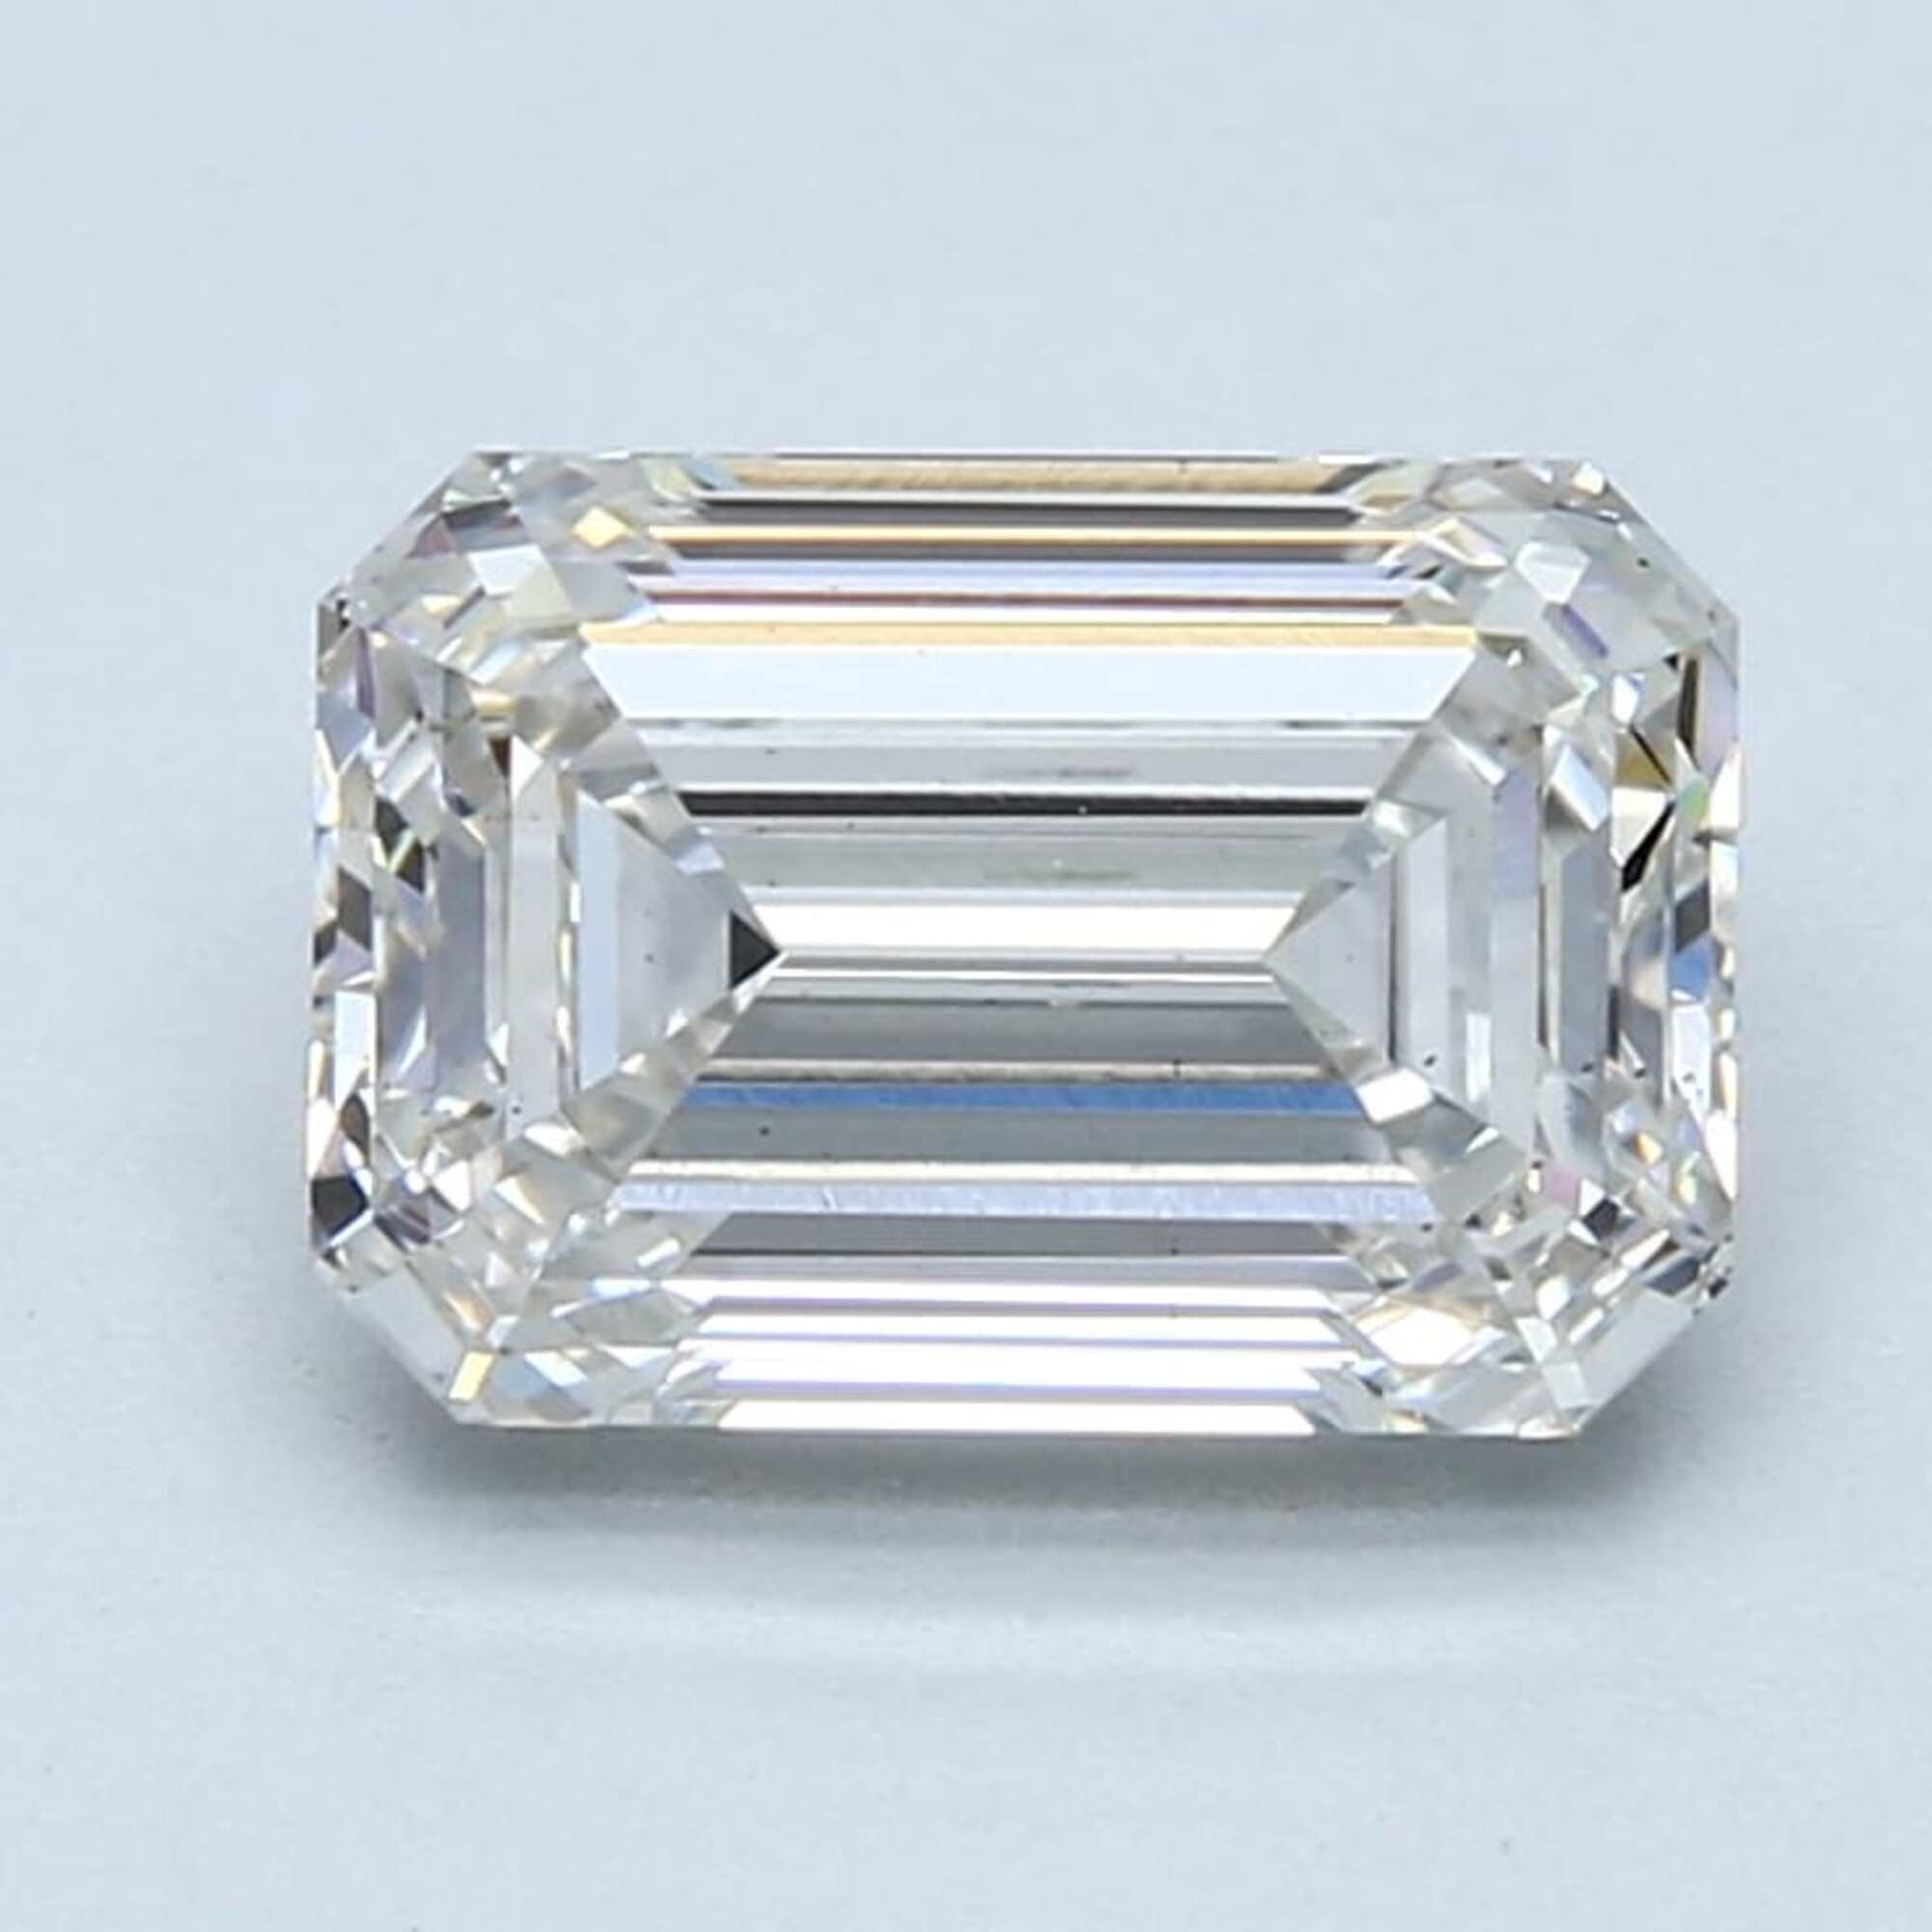 2.51 ct H VS2 Emerald cut Diamond